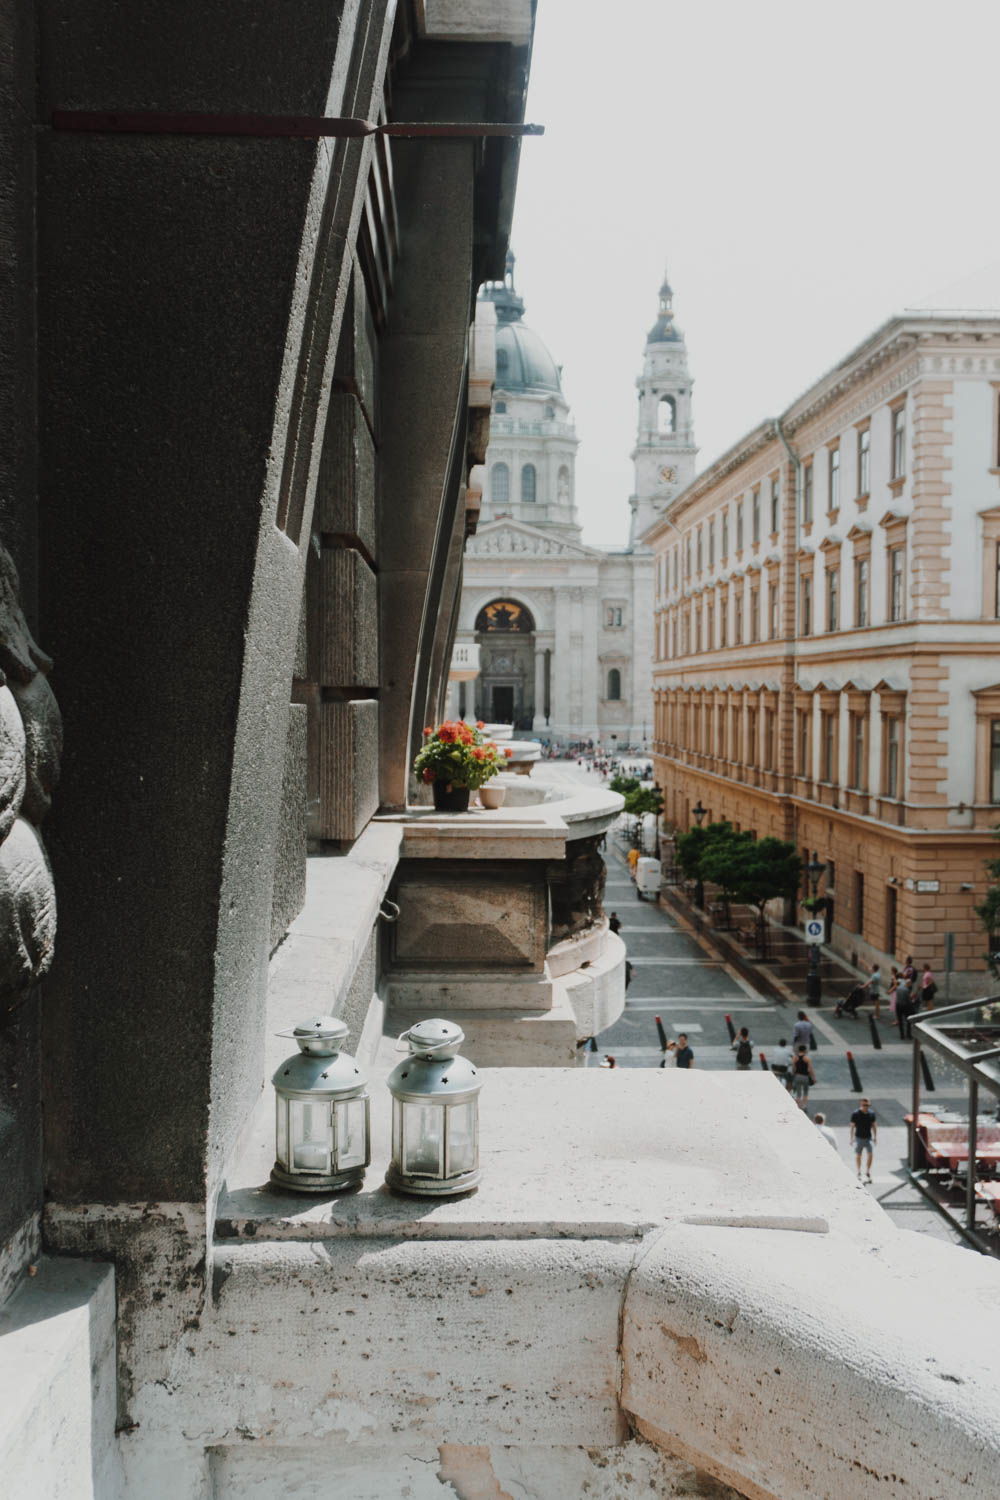 Budapest Hungary / Travel Guide / St. Stephen's Basilica / RG Daily Blog /